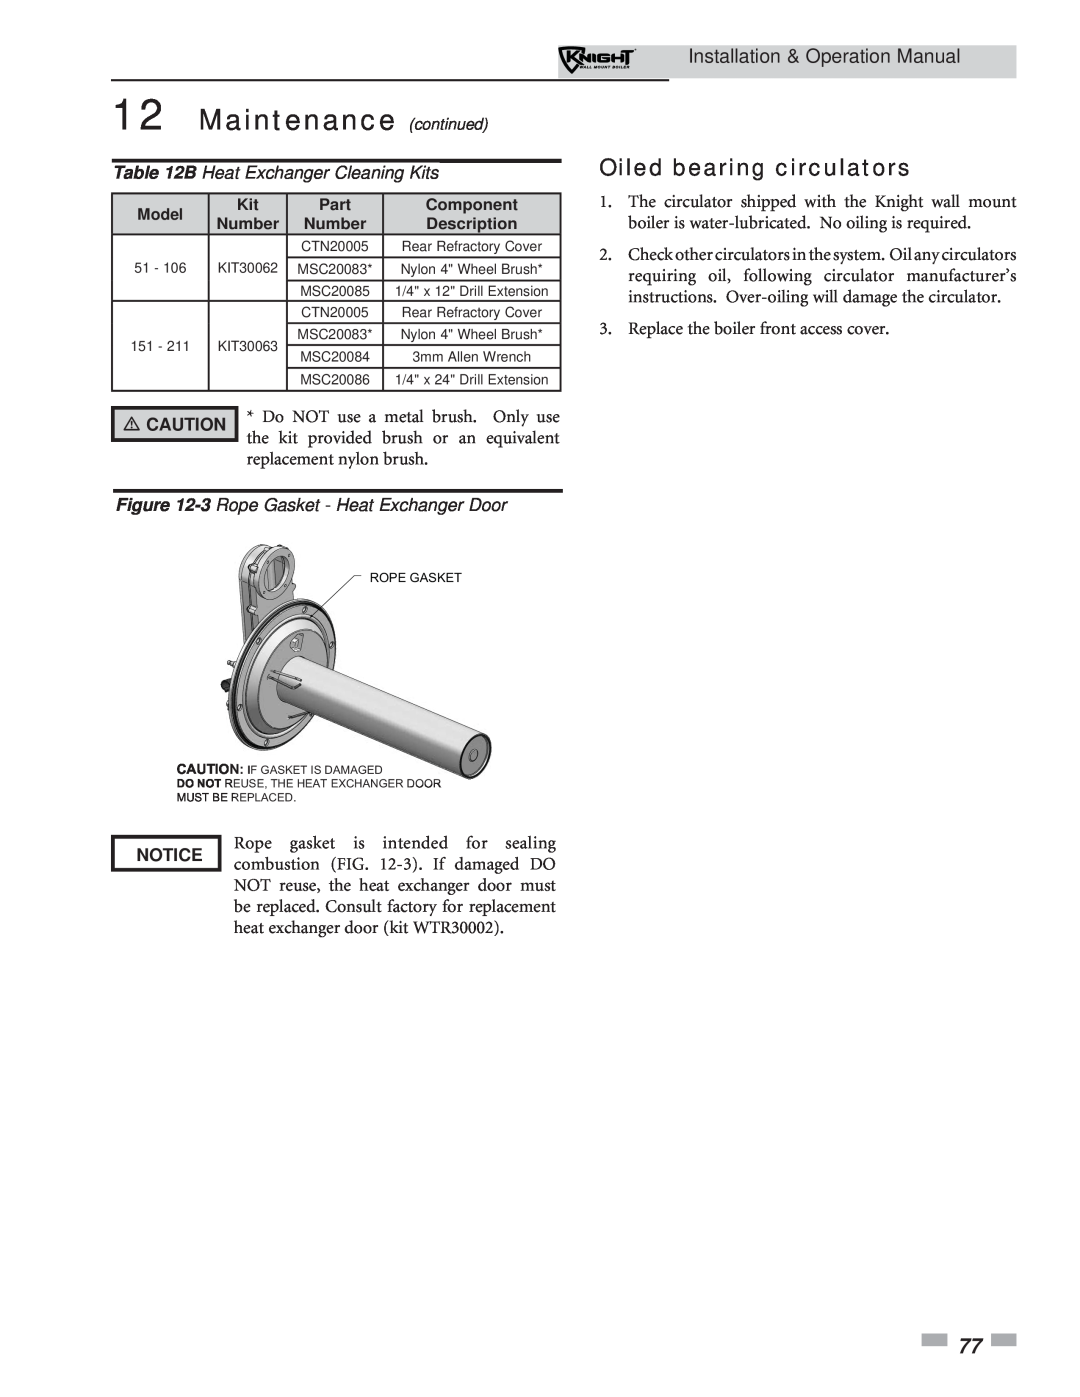 Lochinvar 51-211 Oiled bearing circulators, B Heat Exchanger Cleaning Kits, 3 Rope Gasket - Heat Exchanger Door 